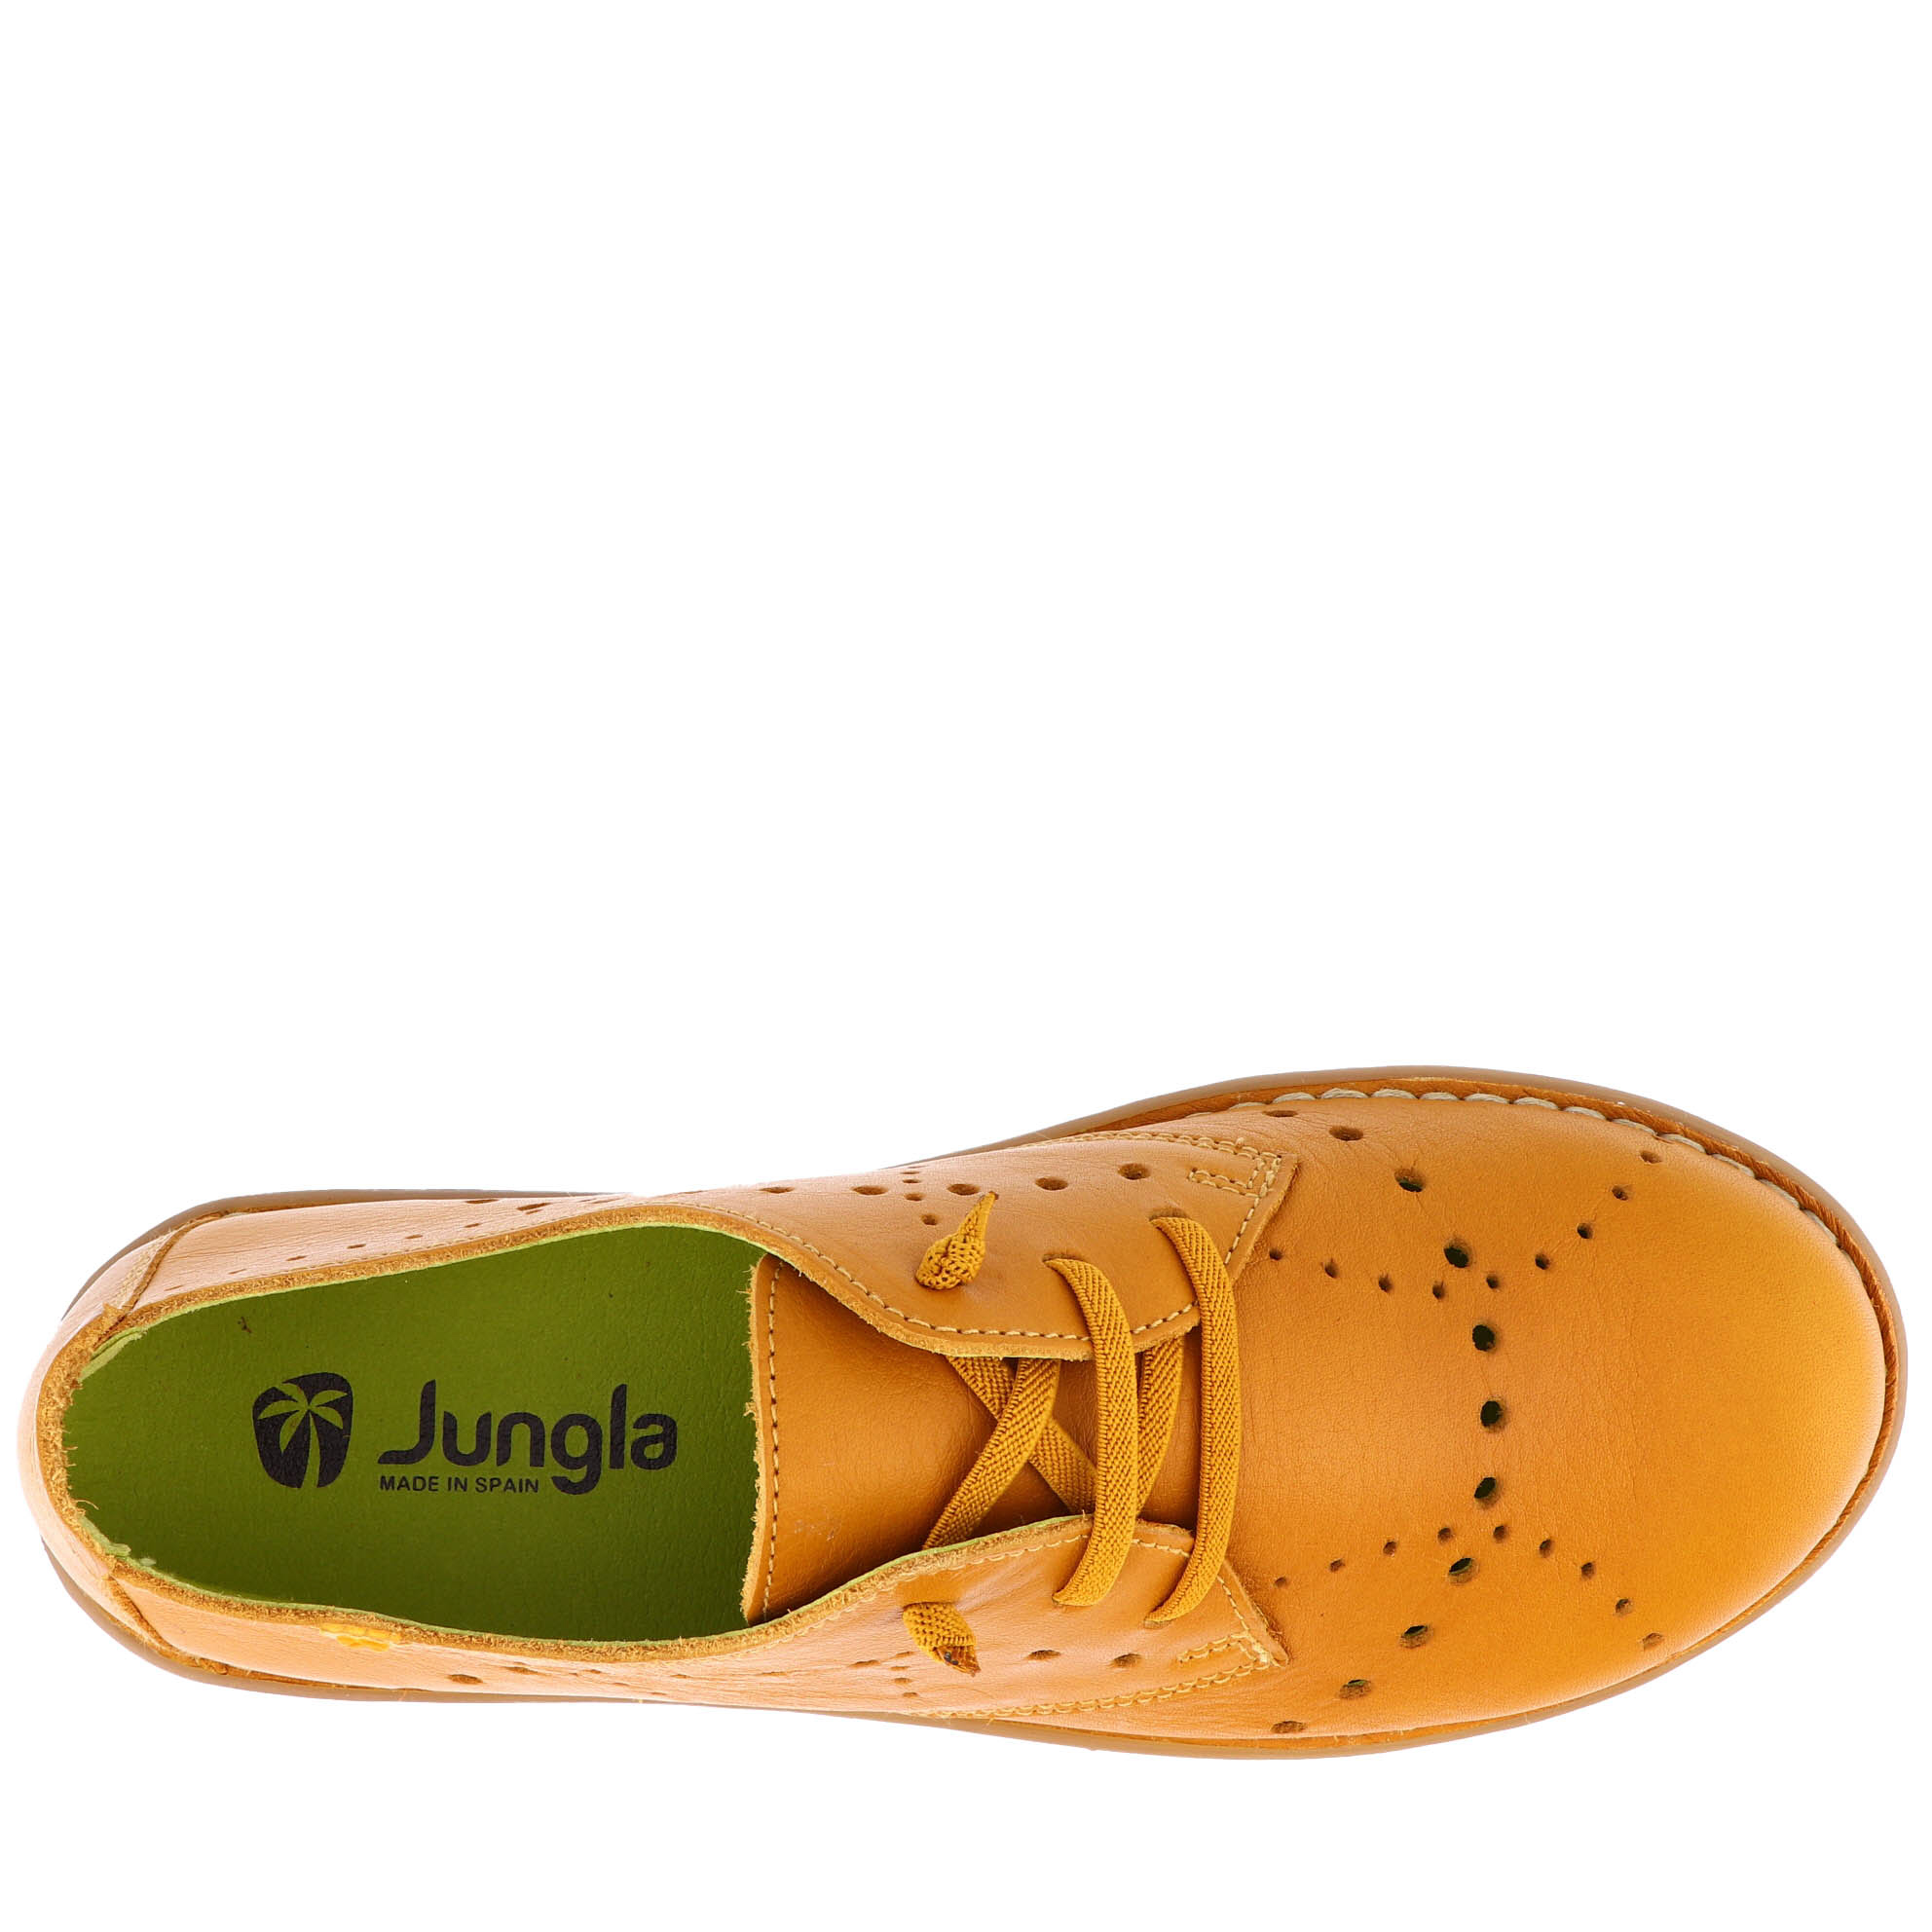 Jungla Slipon - Kunitz Shoes